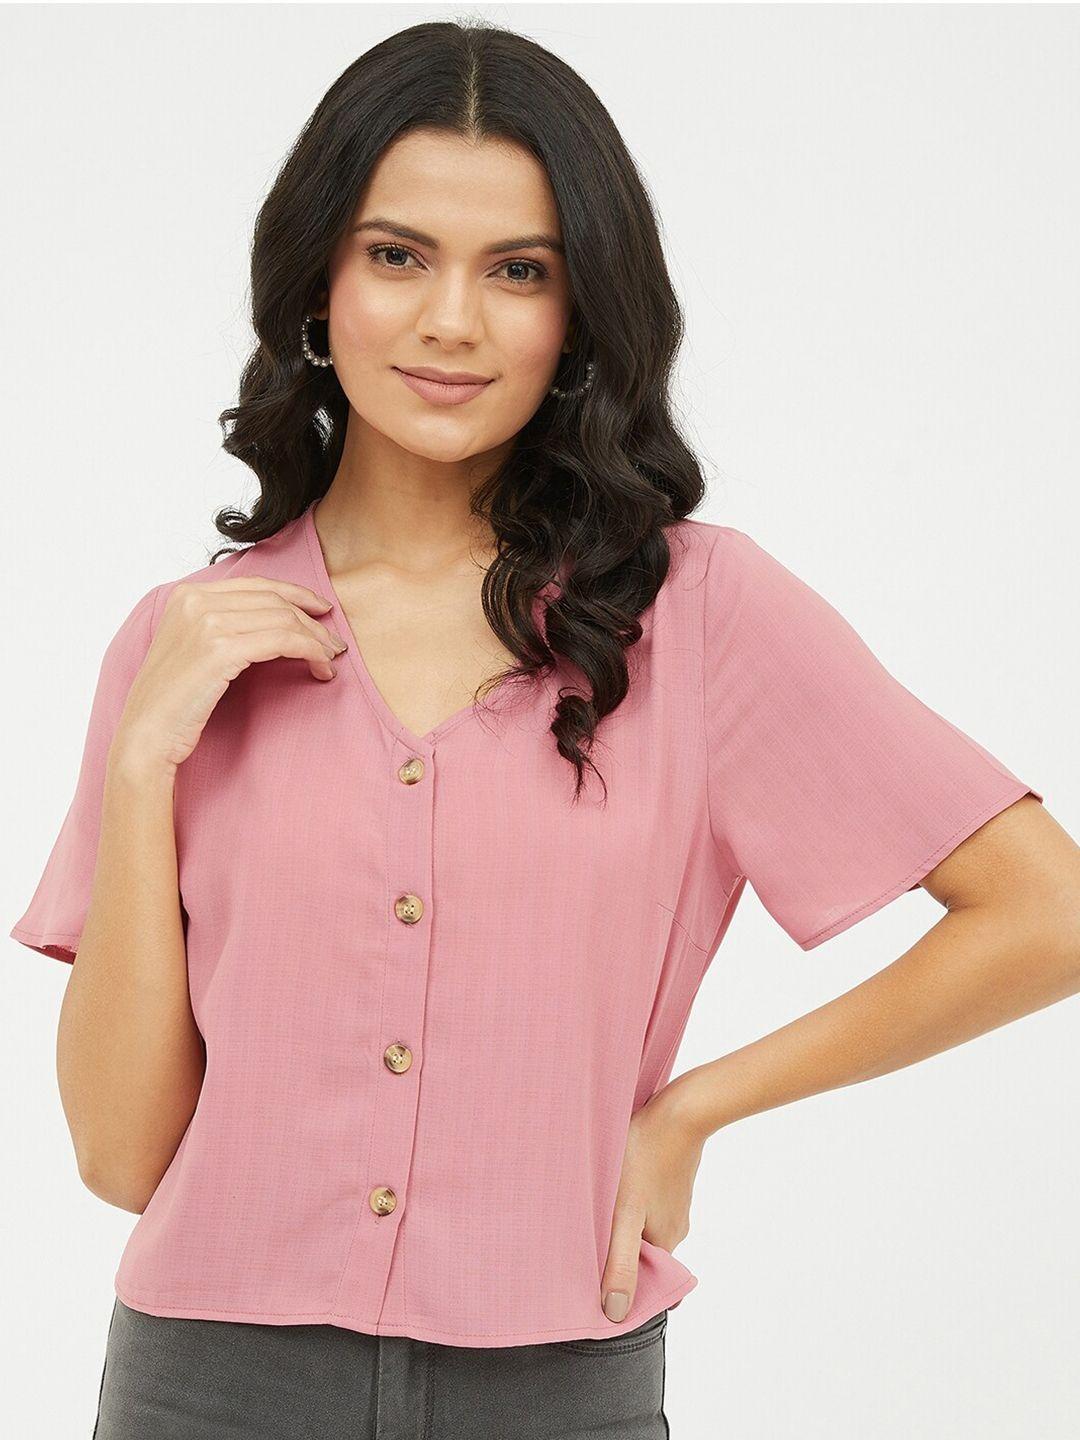 harpa-pink-shirt-style-top